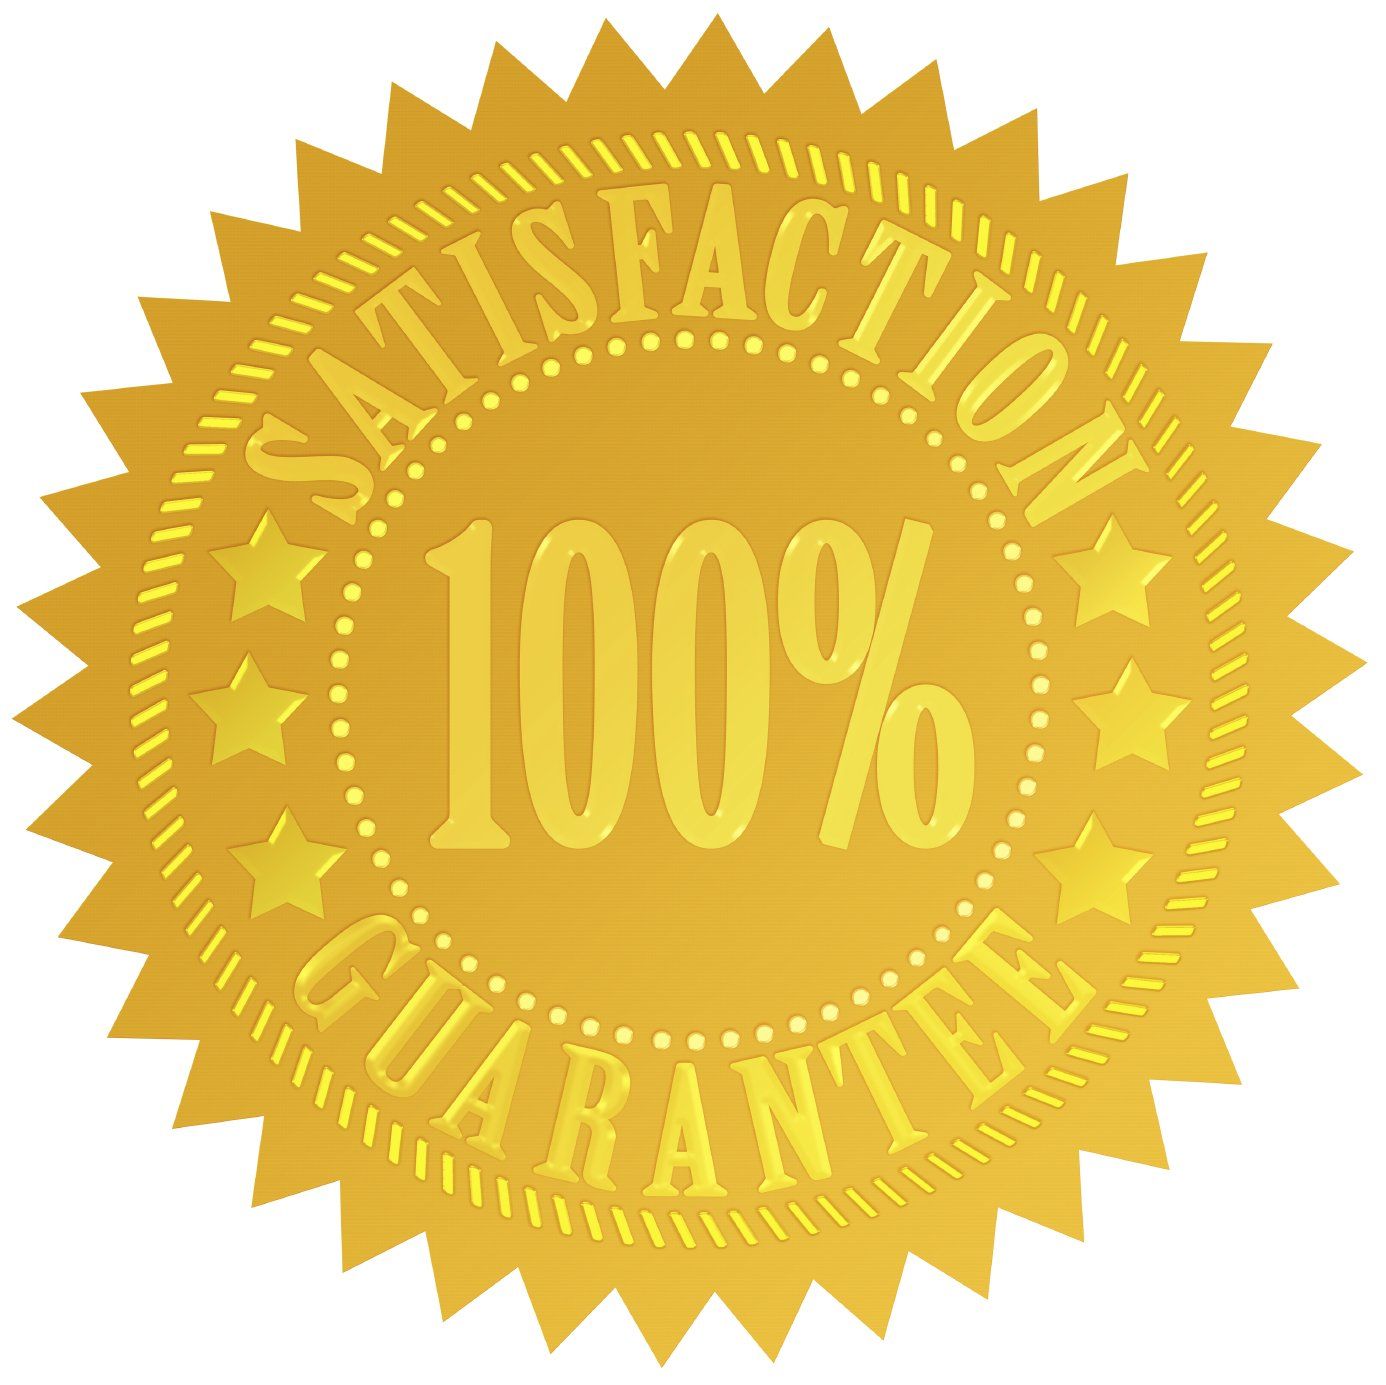 Satisfaction 100% guarantee